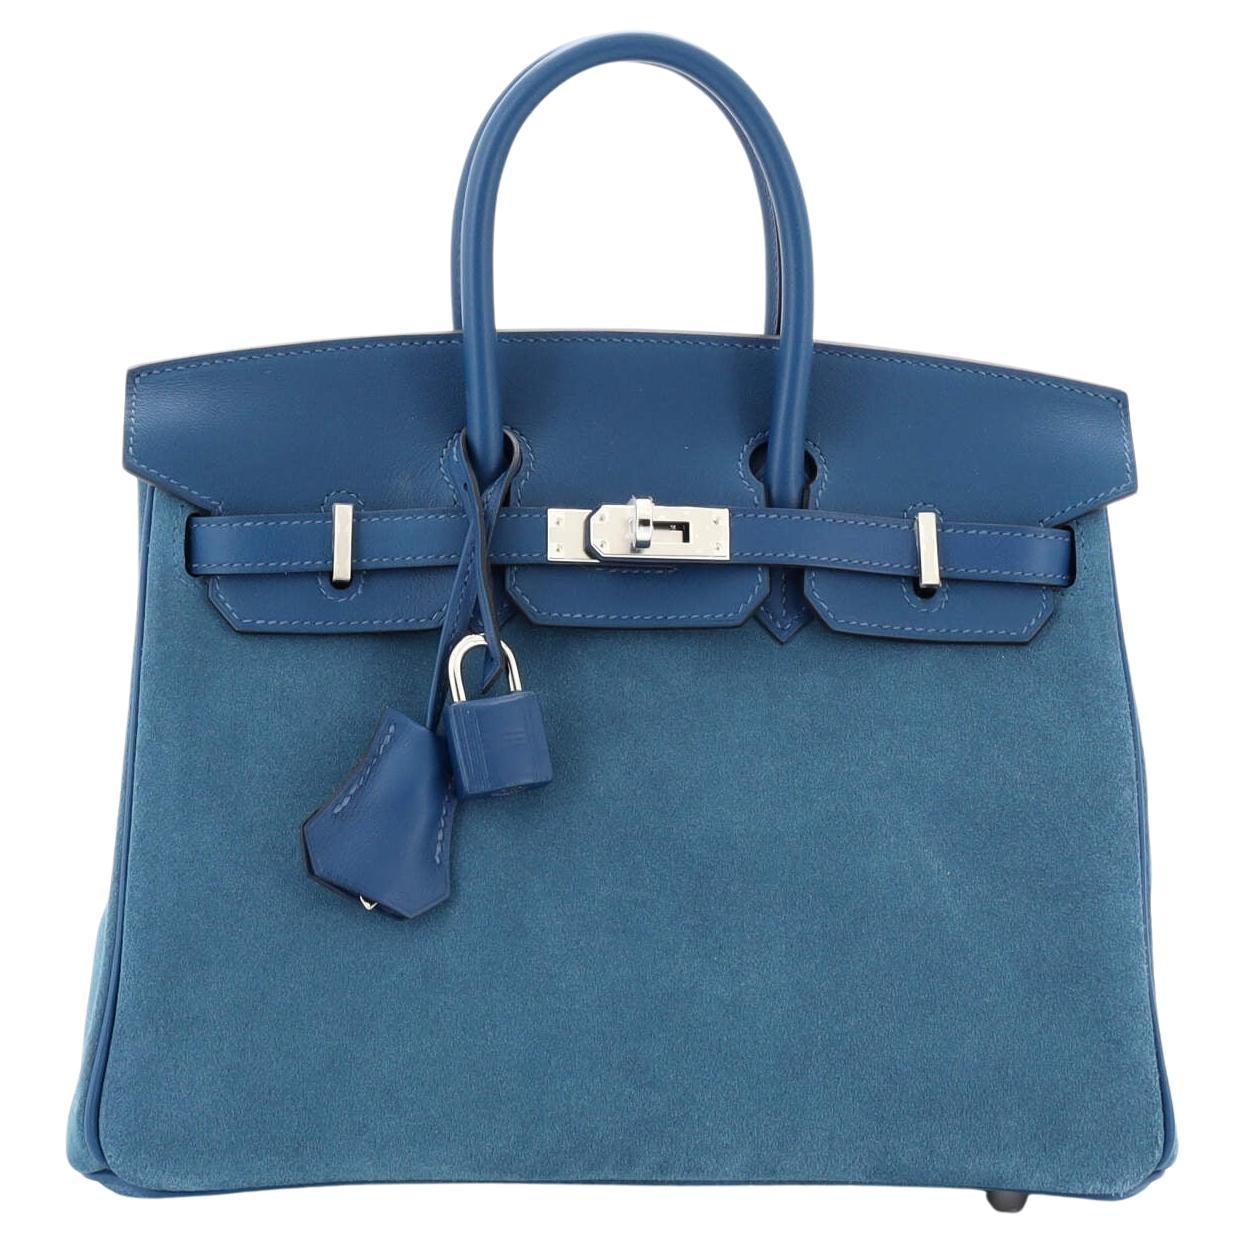 Hermes Birkin Handbag Bleu Thalassa Grizzly with Swift with Palladium Hardware 